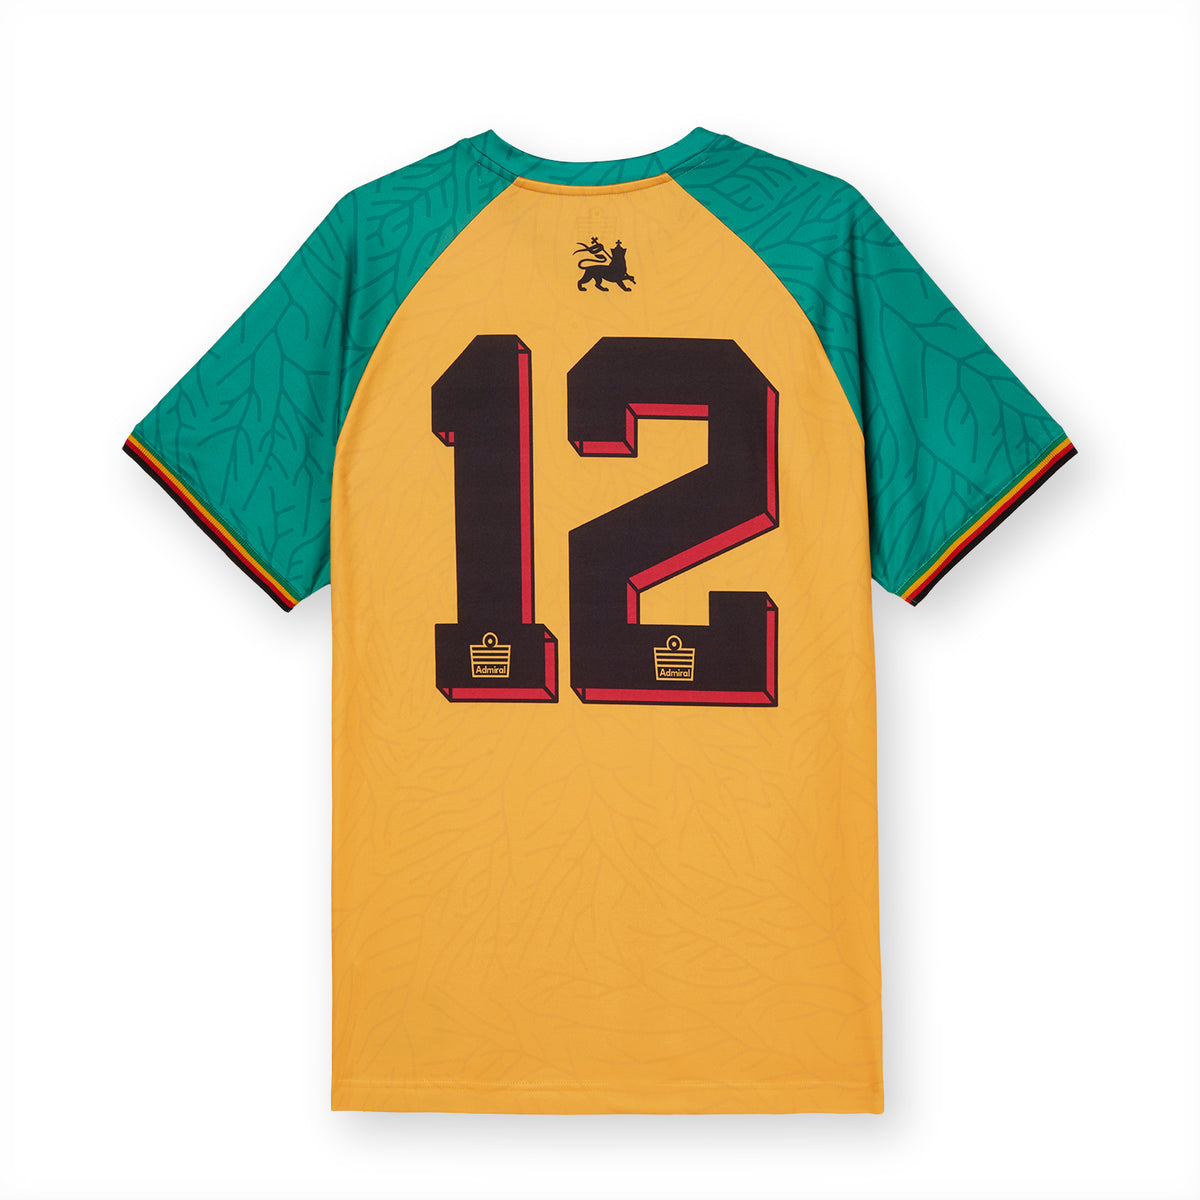 Admiral x Bob Marley - AC10006-19 Limited Edition Nugget / Green Home Shirt  - Football Shirt